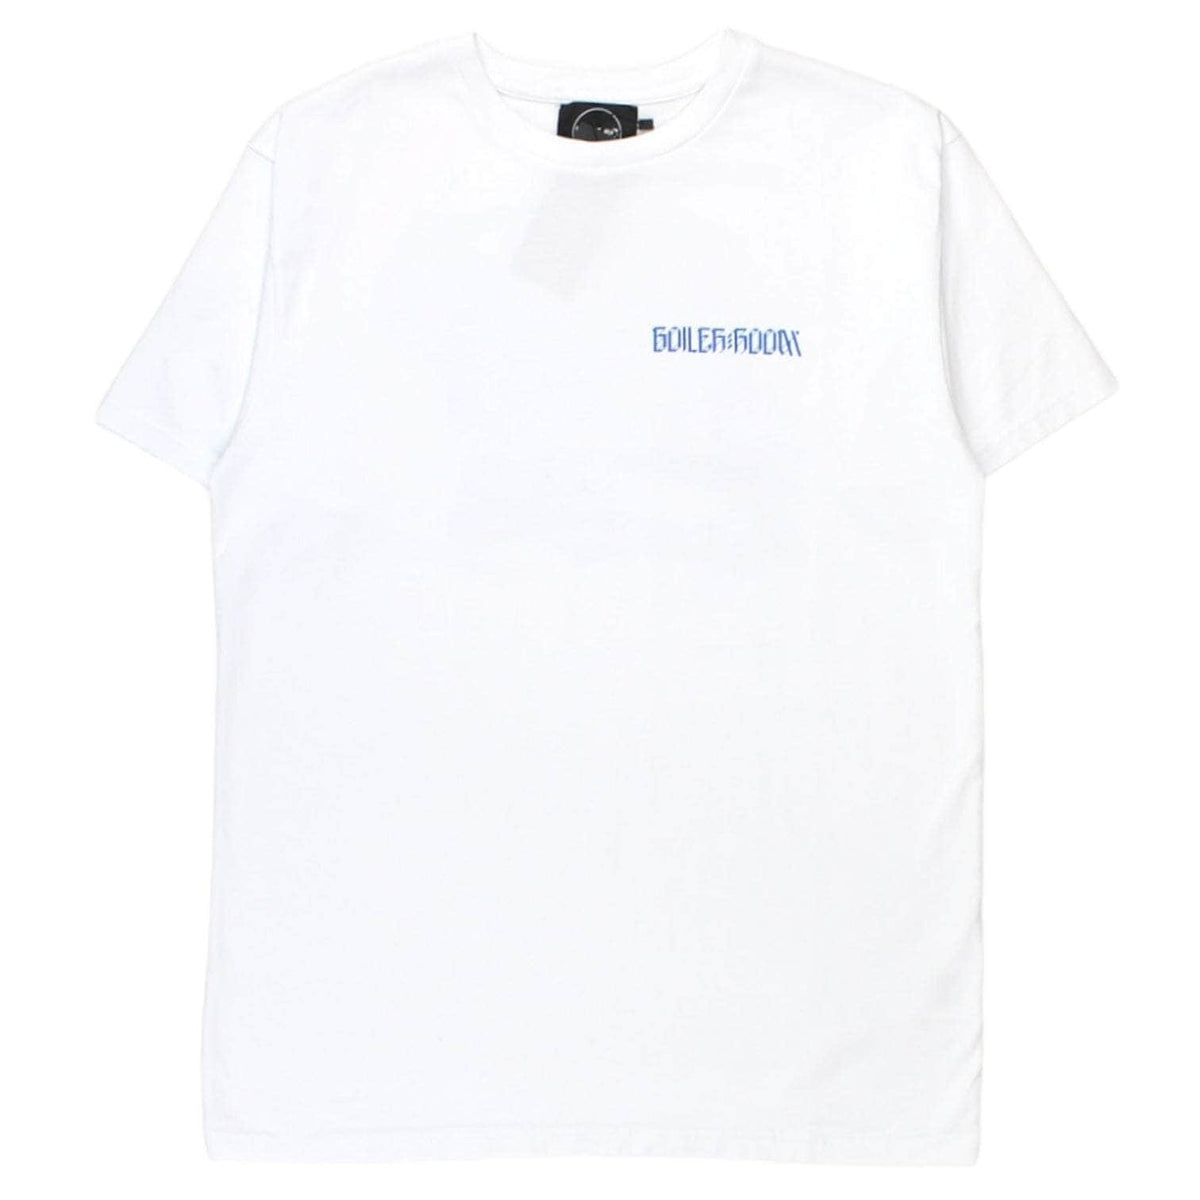 x30 Men's Boiler Room White & Blue Printed Graphic T-shirt Bundle